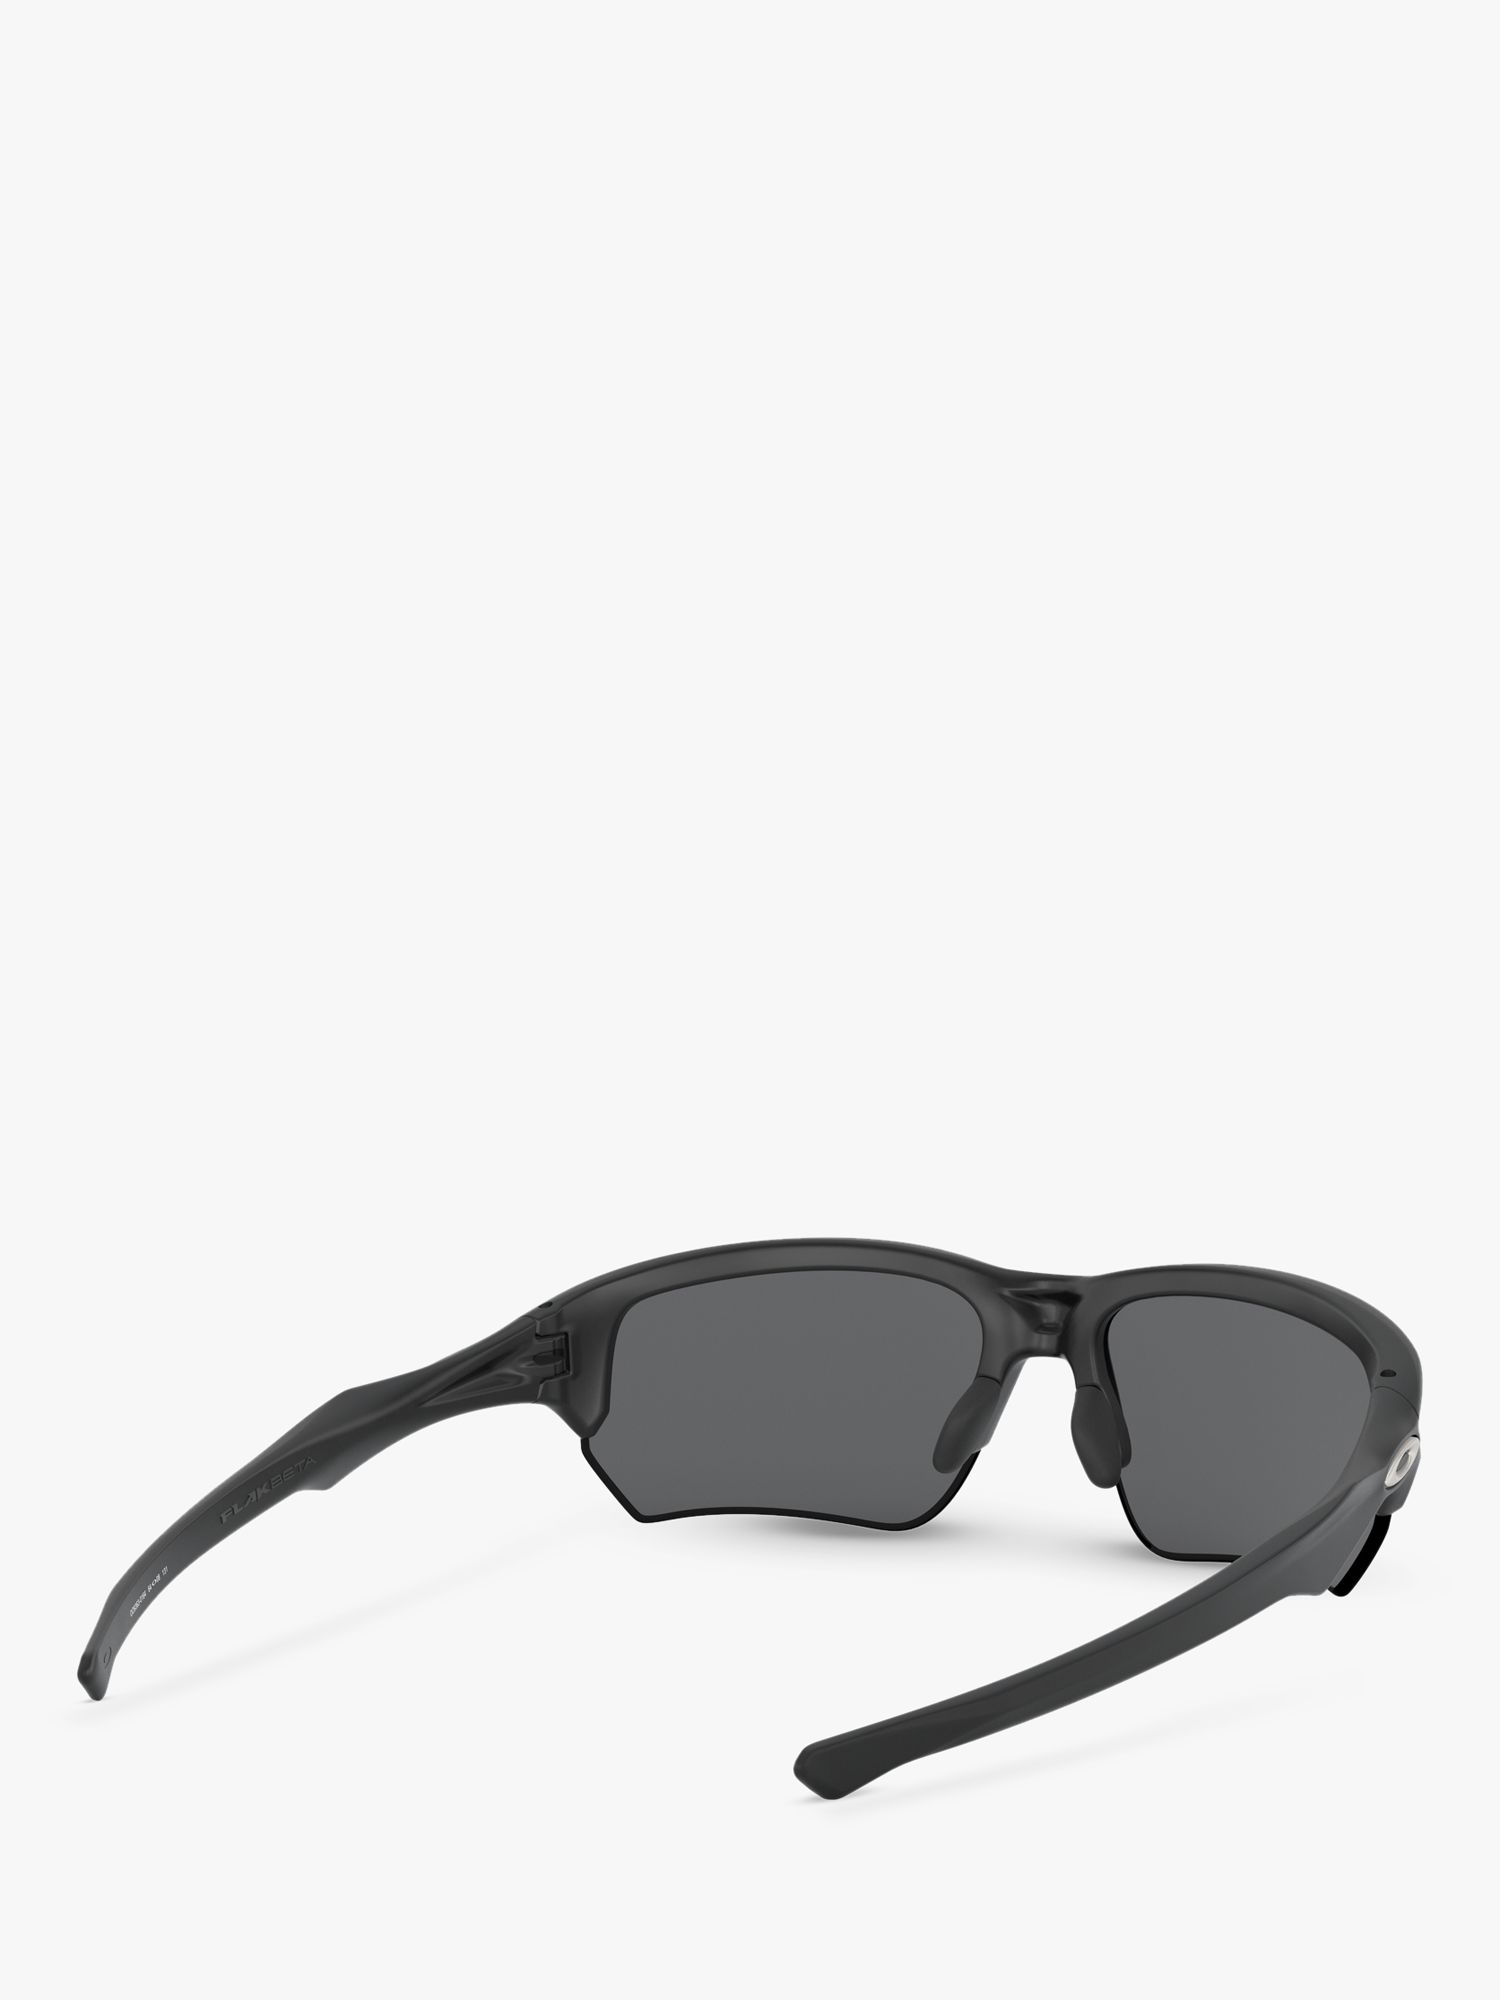 Oakley OO9363 Men's Prizm Rectangular Sunglasses, Matte Black/Grey